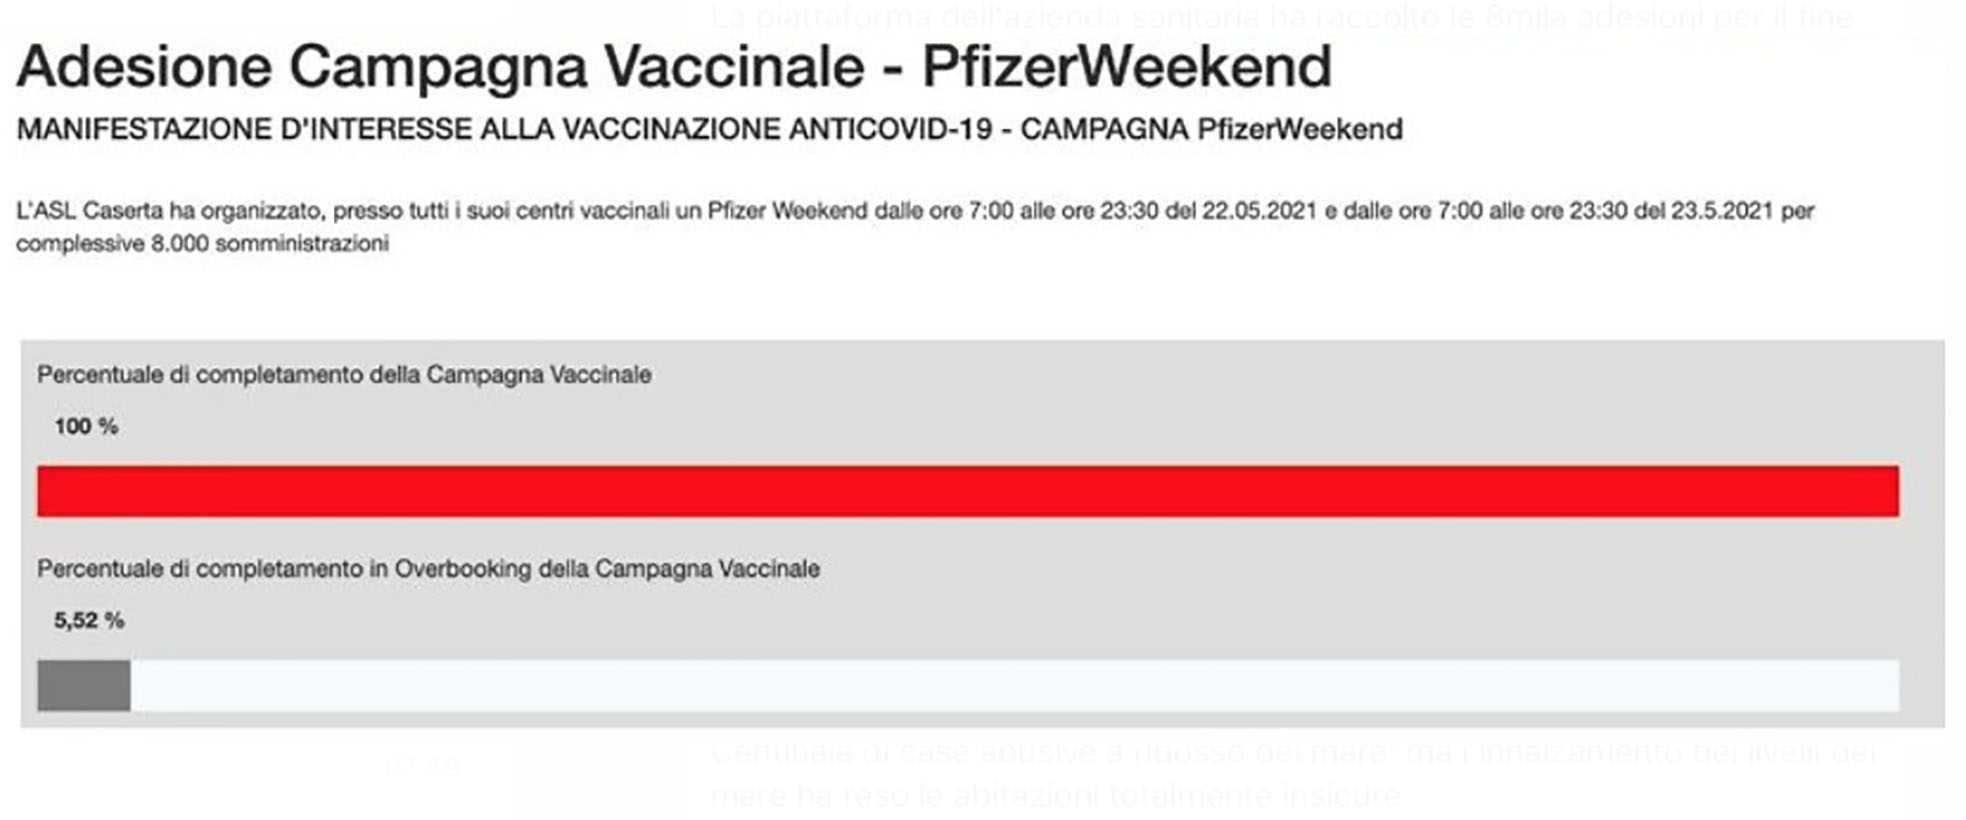 Corsa al vaccino: in 10 minuti prenotate tutte le 8.000 dosi per ‘Pfizer weekend’